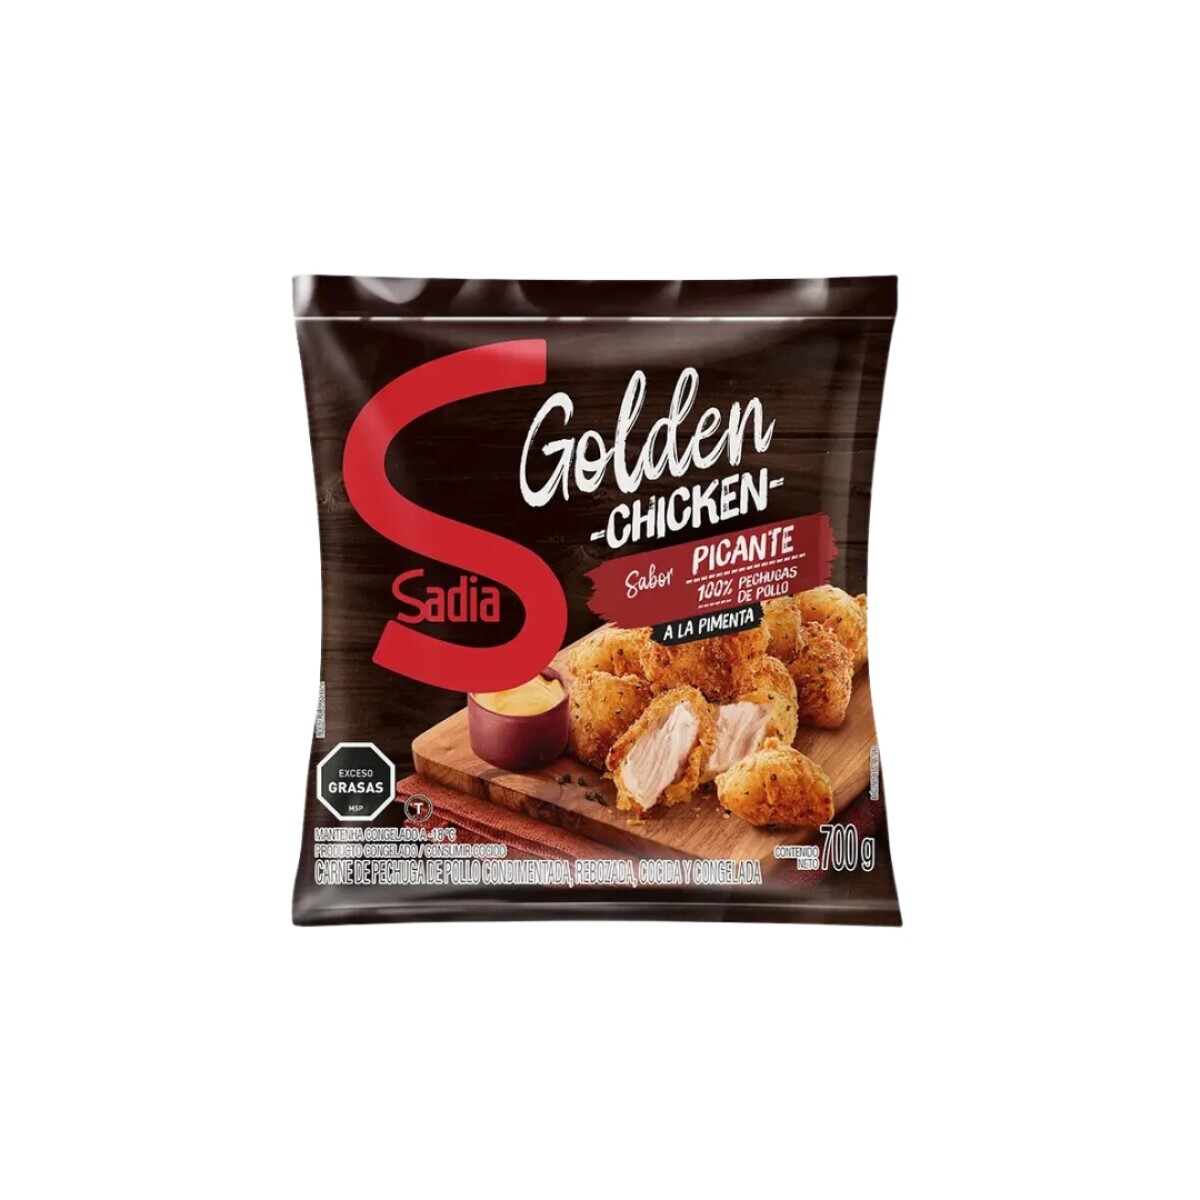 Golden Chicken Picante Sadia - 700 grs 